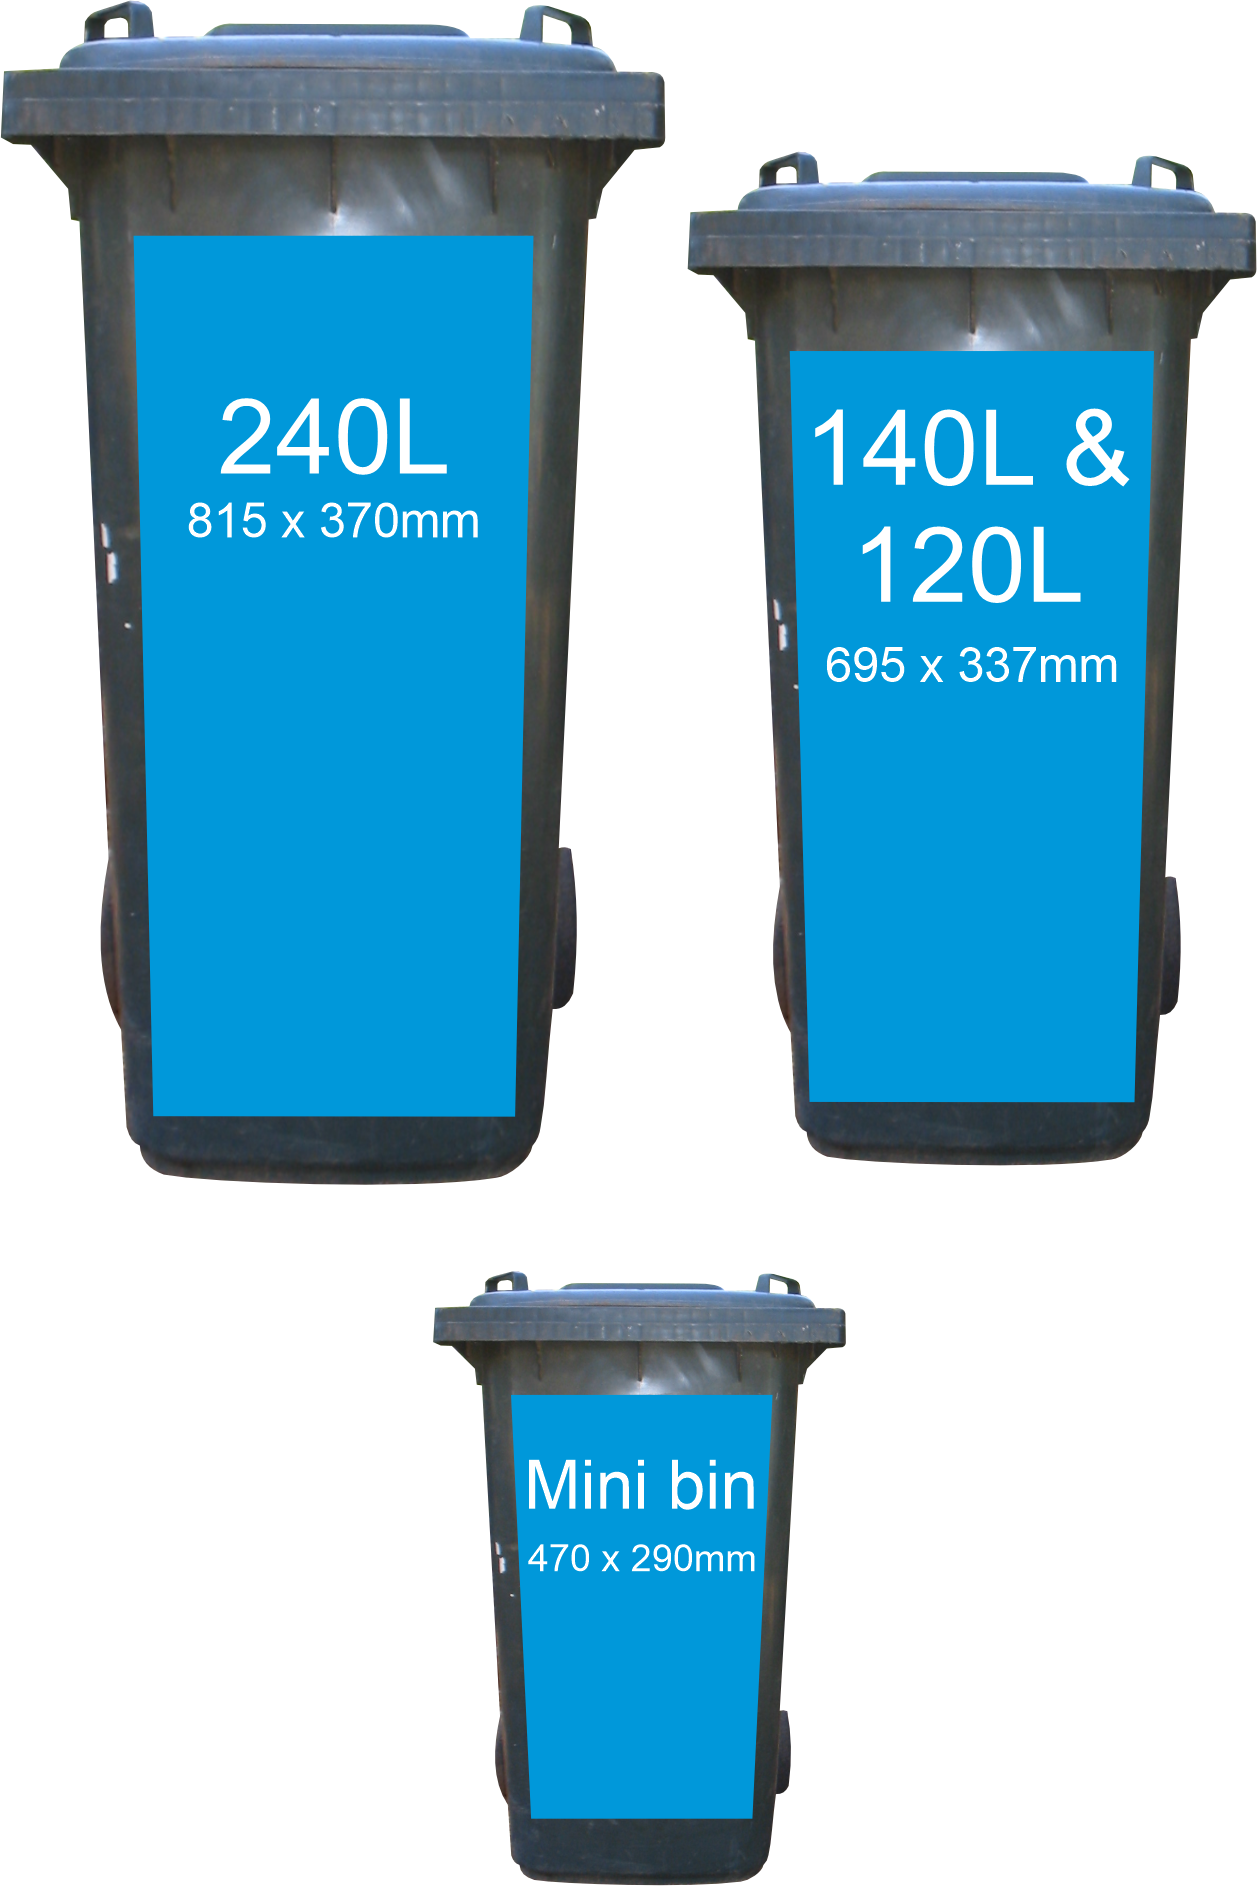 sizes in wheelie bin sticker